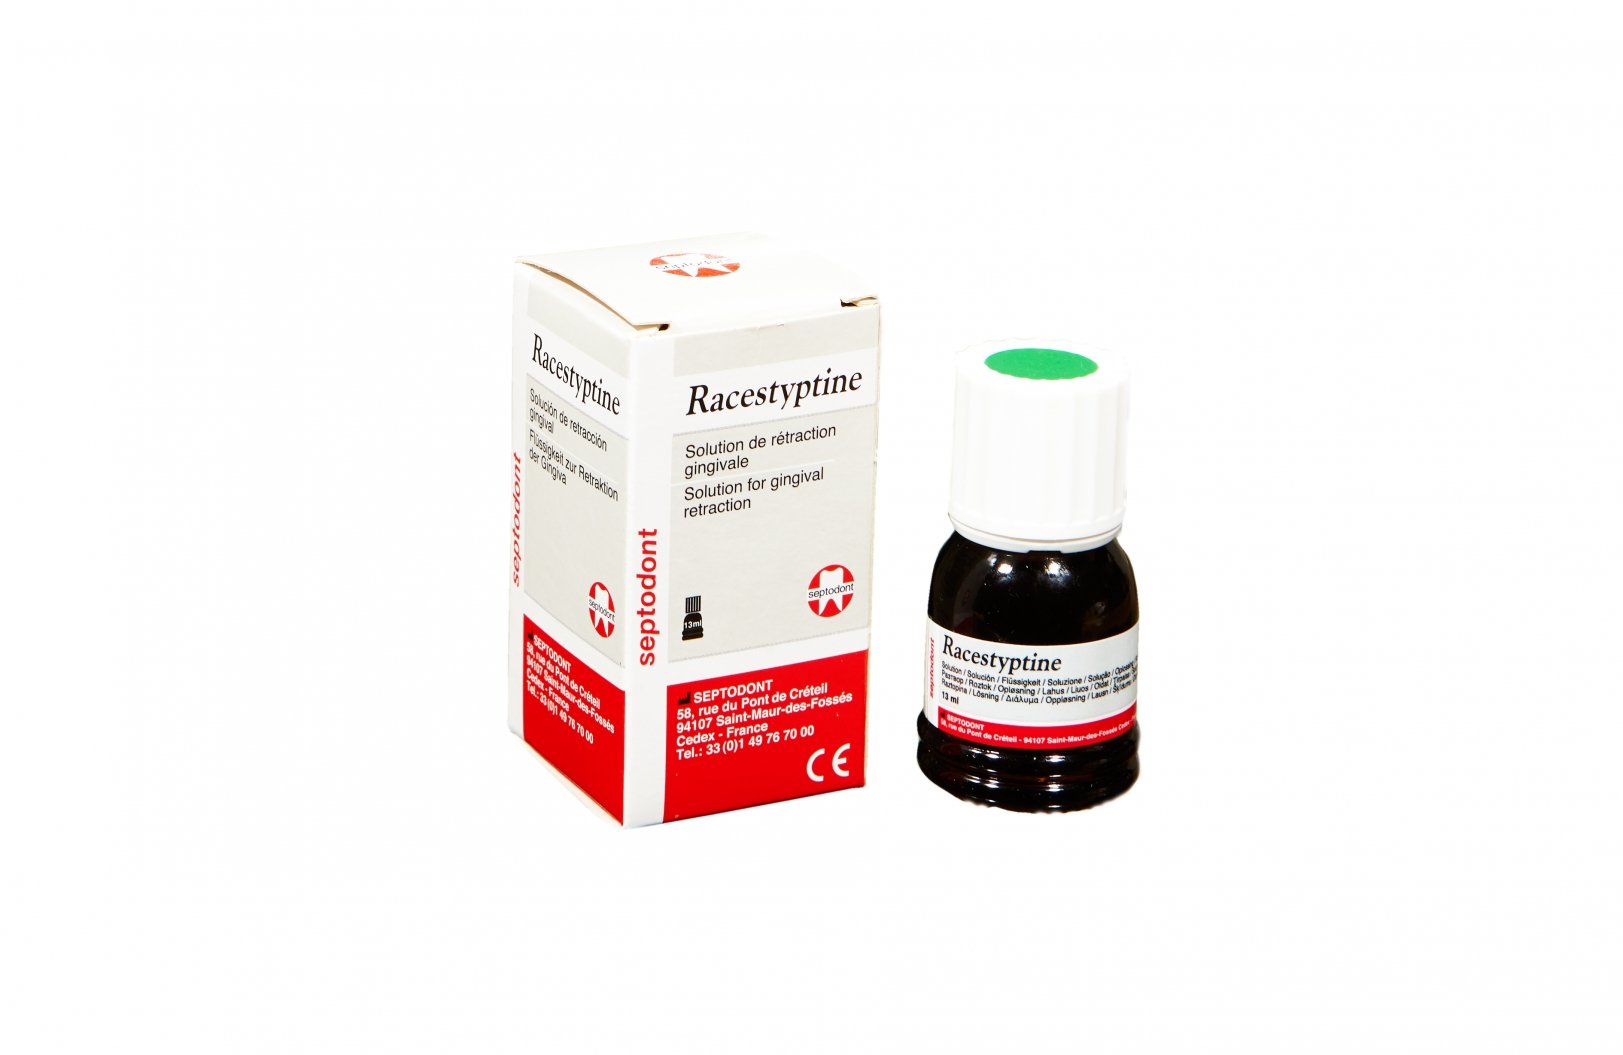 Septodont Racestyptine Haemostatic solution